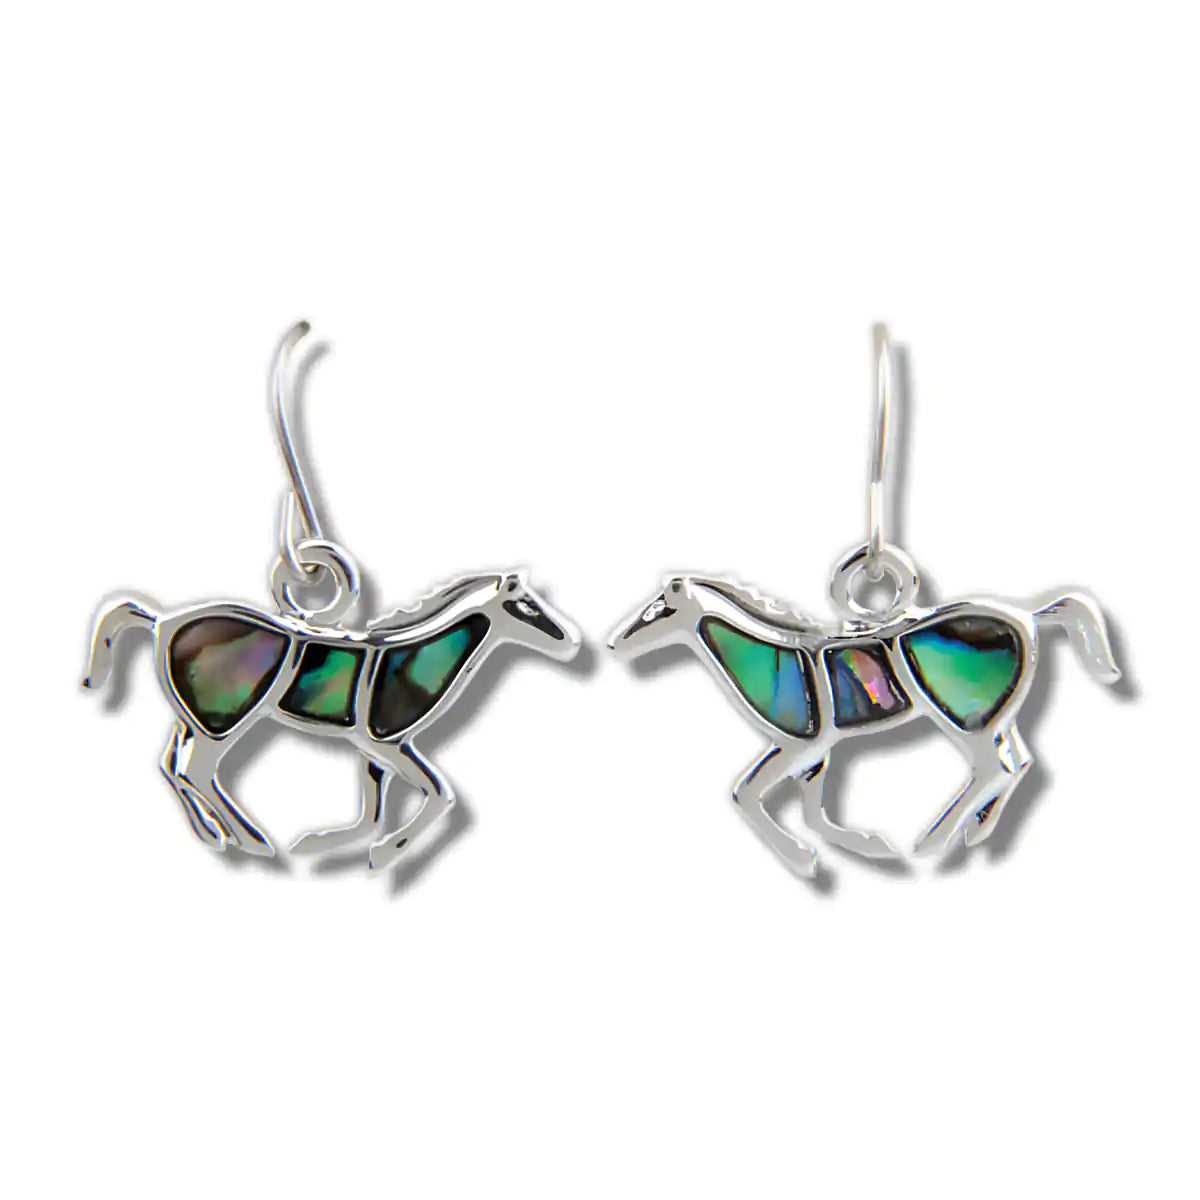 Glacier pearle stallions earrings